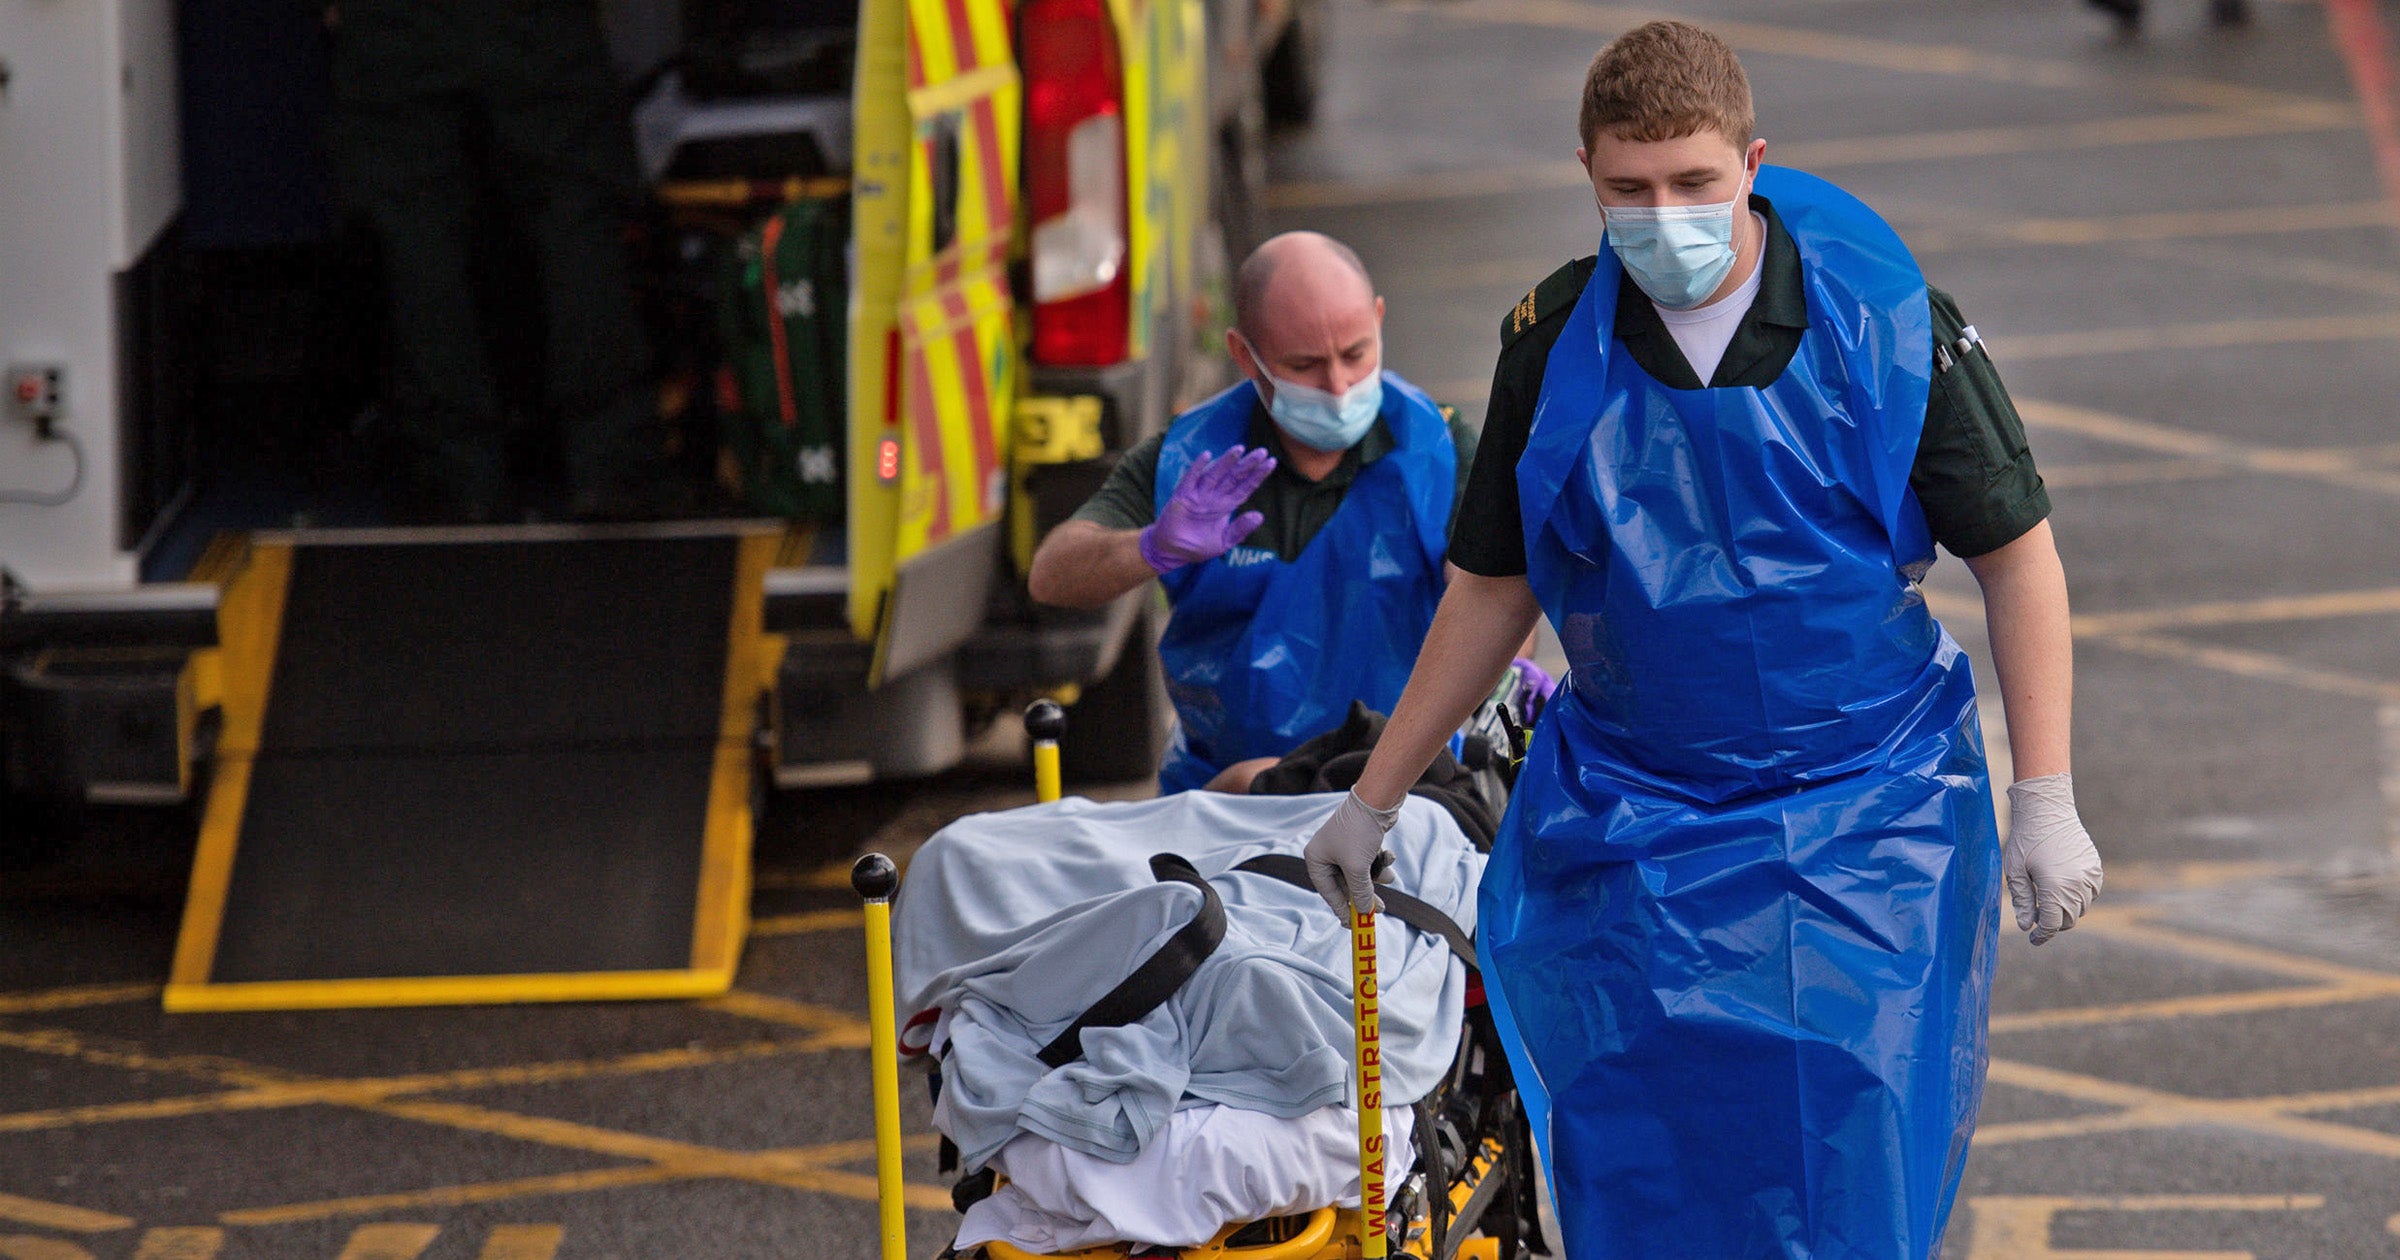 Ambulance crews transport patients into City Hospital in Birmingham